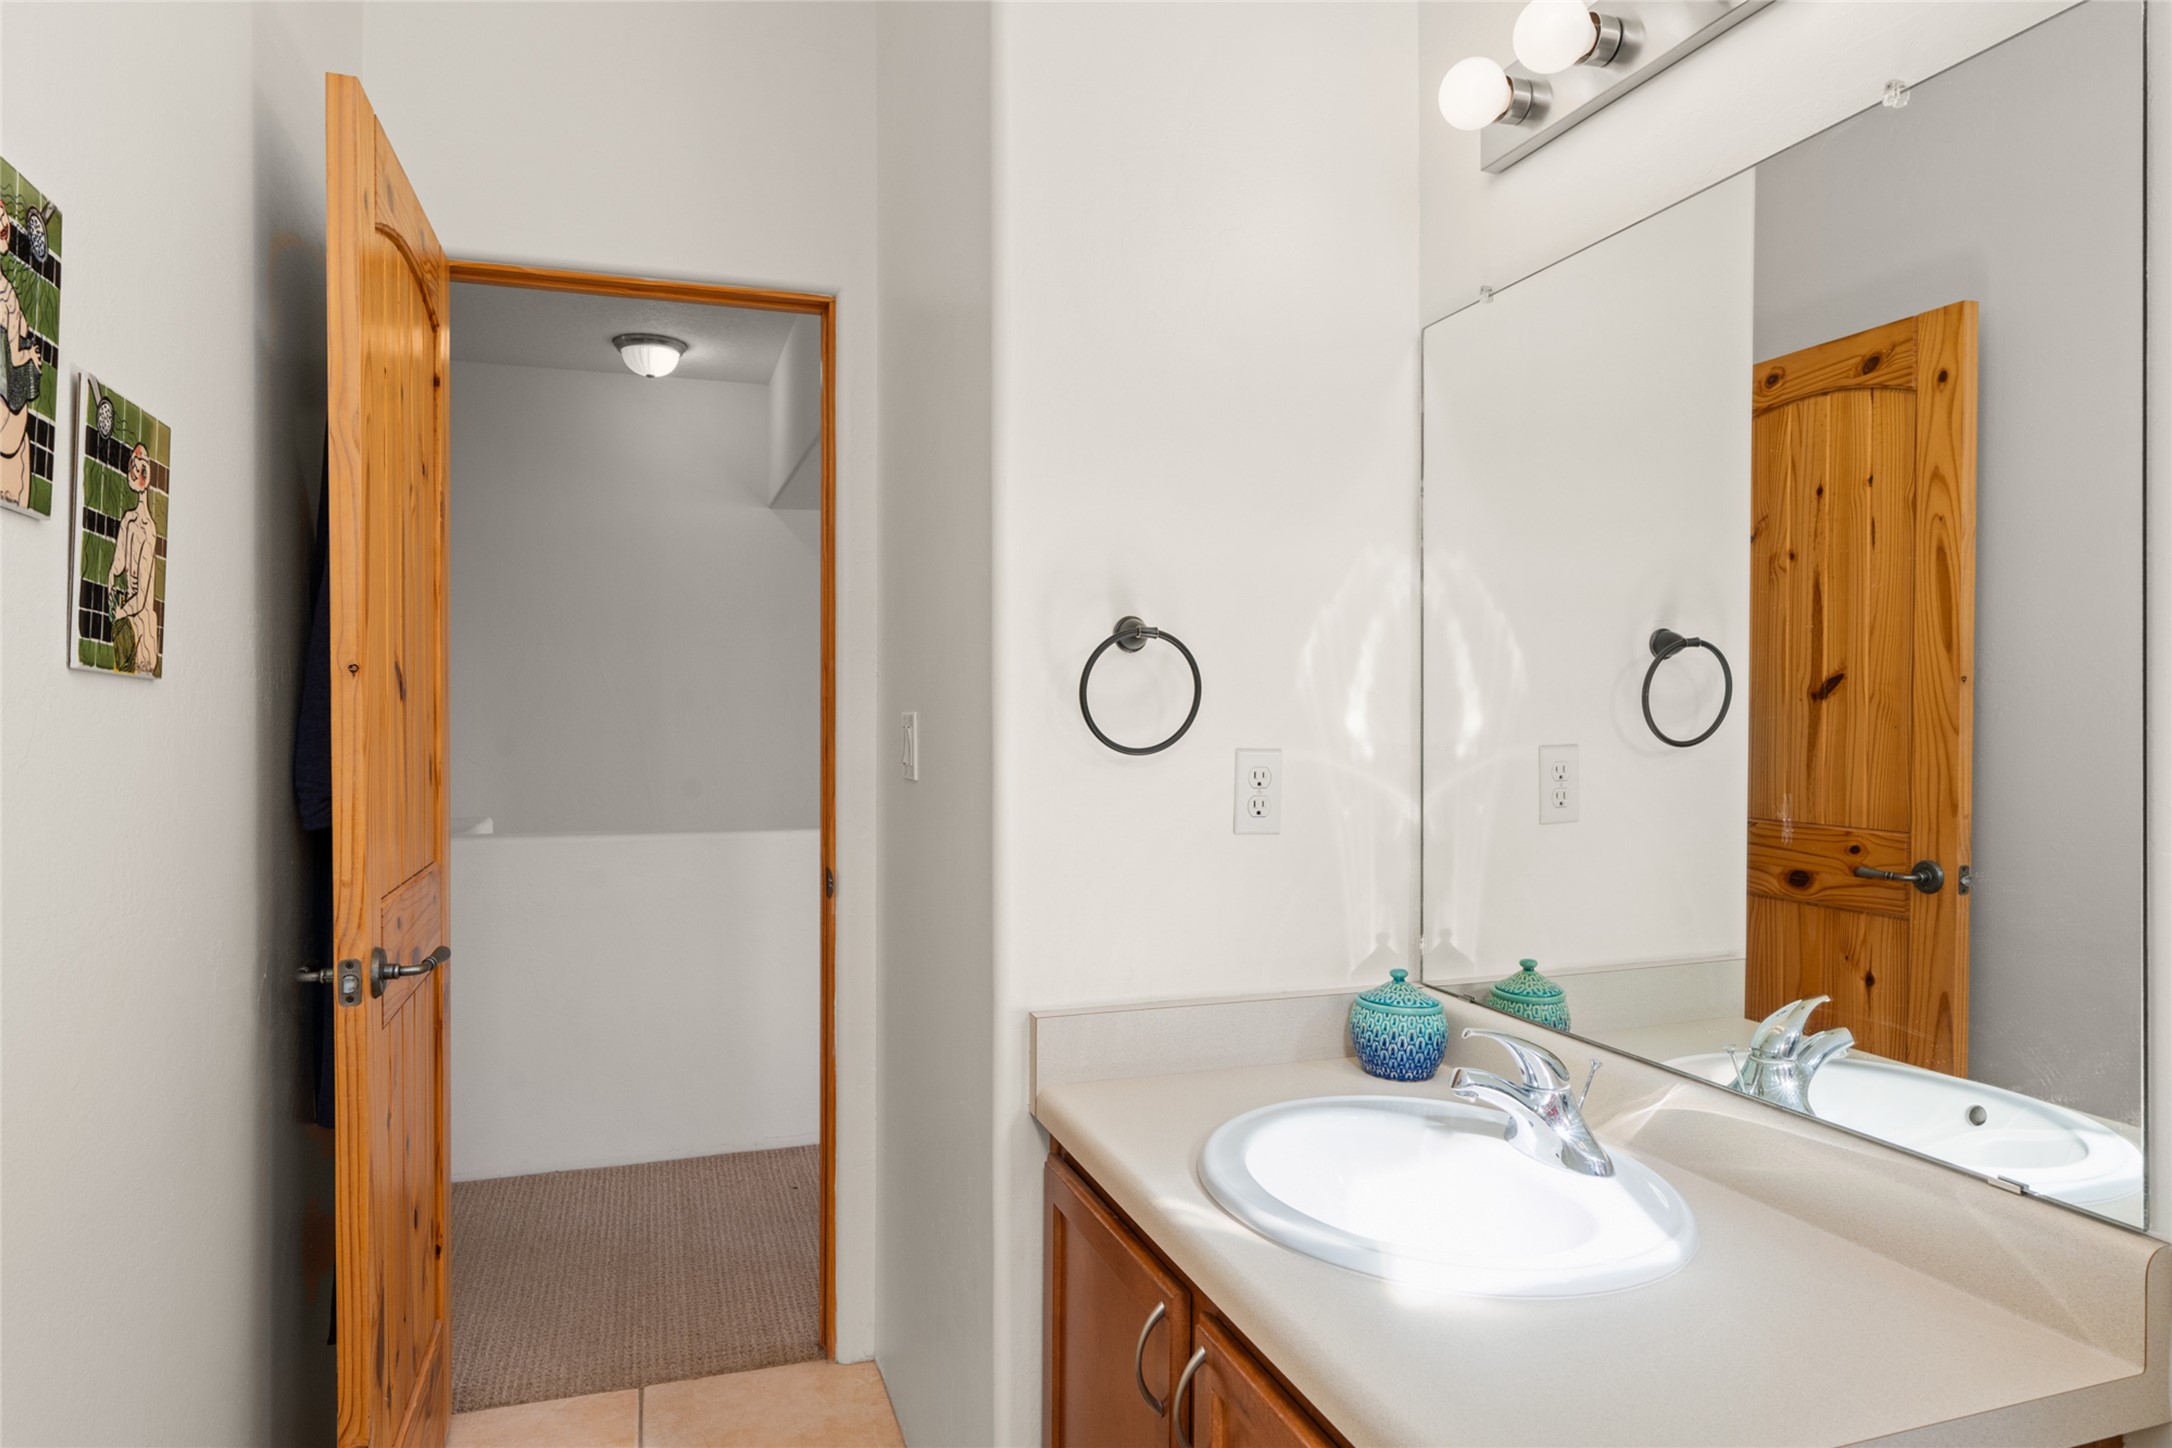 21 E Saddleback Mesa, Santa Fe, New Mexico 87508, 2 Bedrooms Bedrooms, ,3 BathroomsBathrooms,Residential,For Sale,21 E Saddleback Mesa,202400272